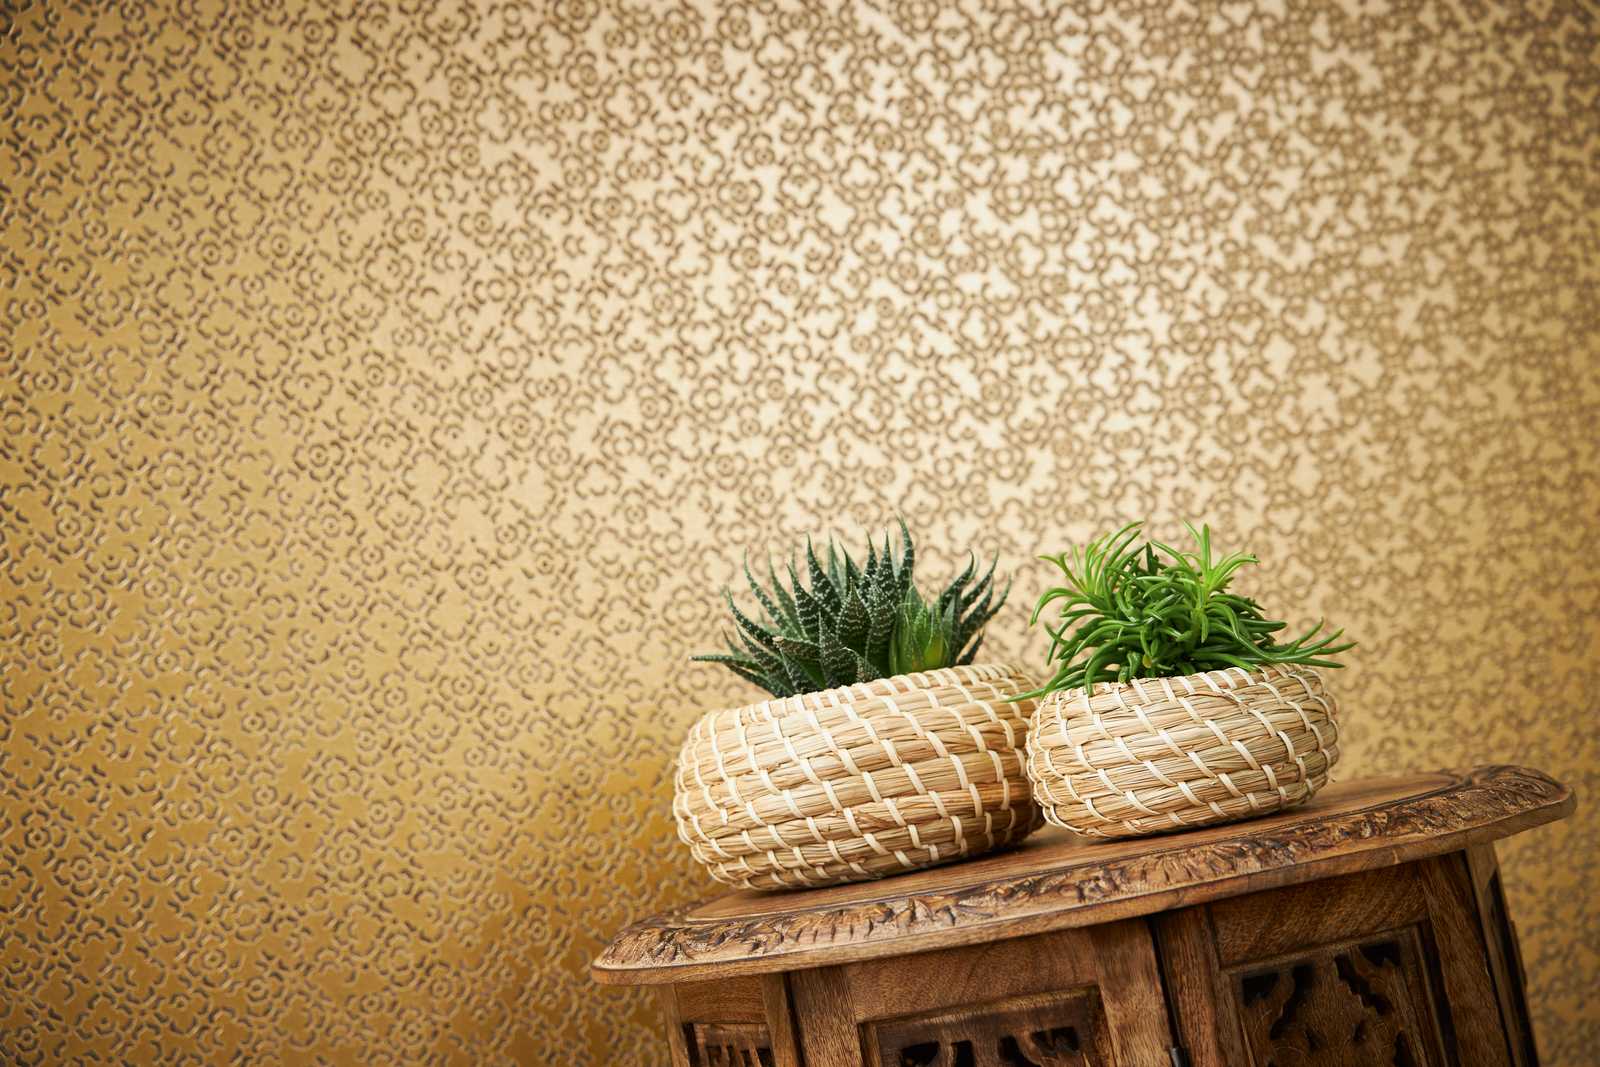             Golden pattern wallpaper with 3D effect & metallic luster - Brown, Yellow, Metallic
        